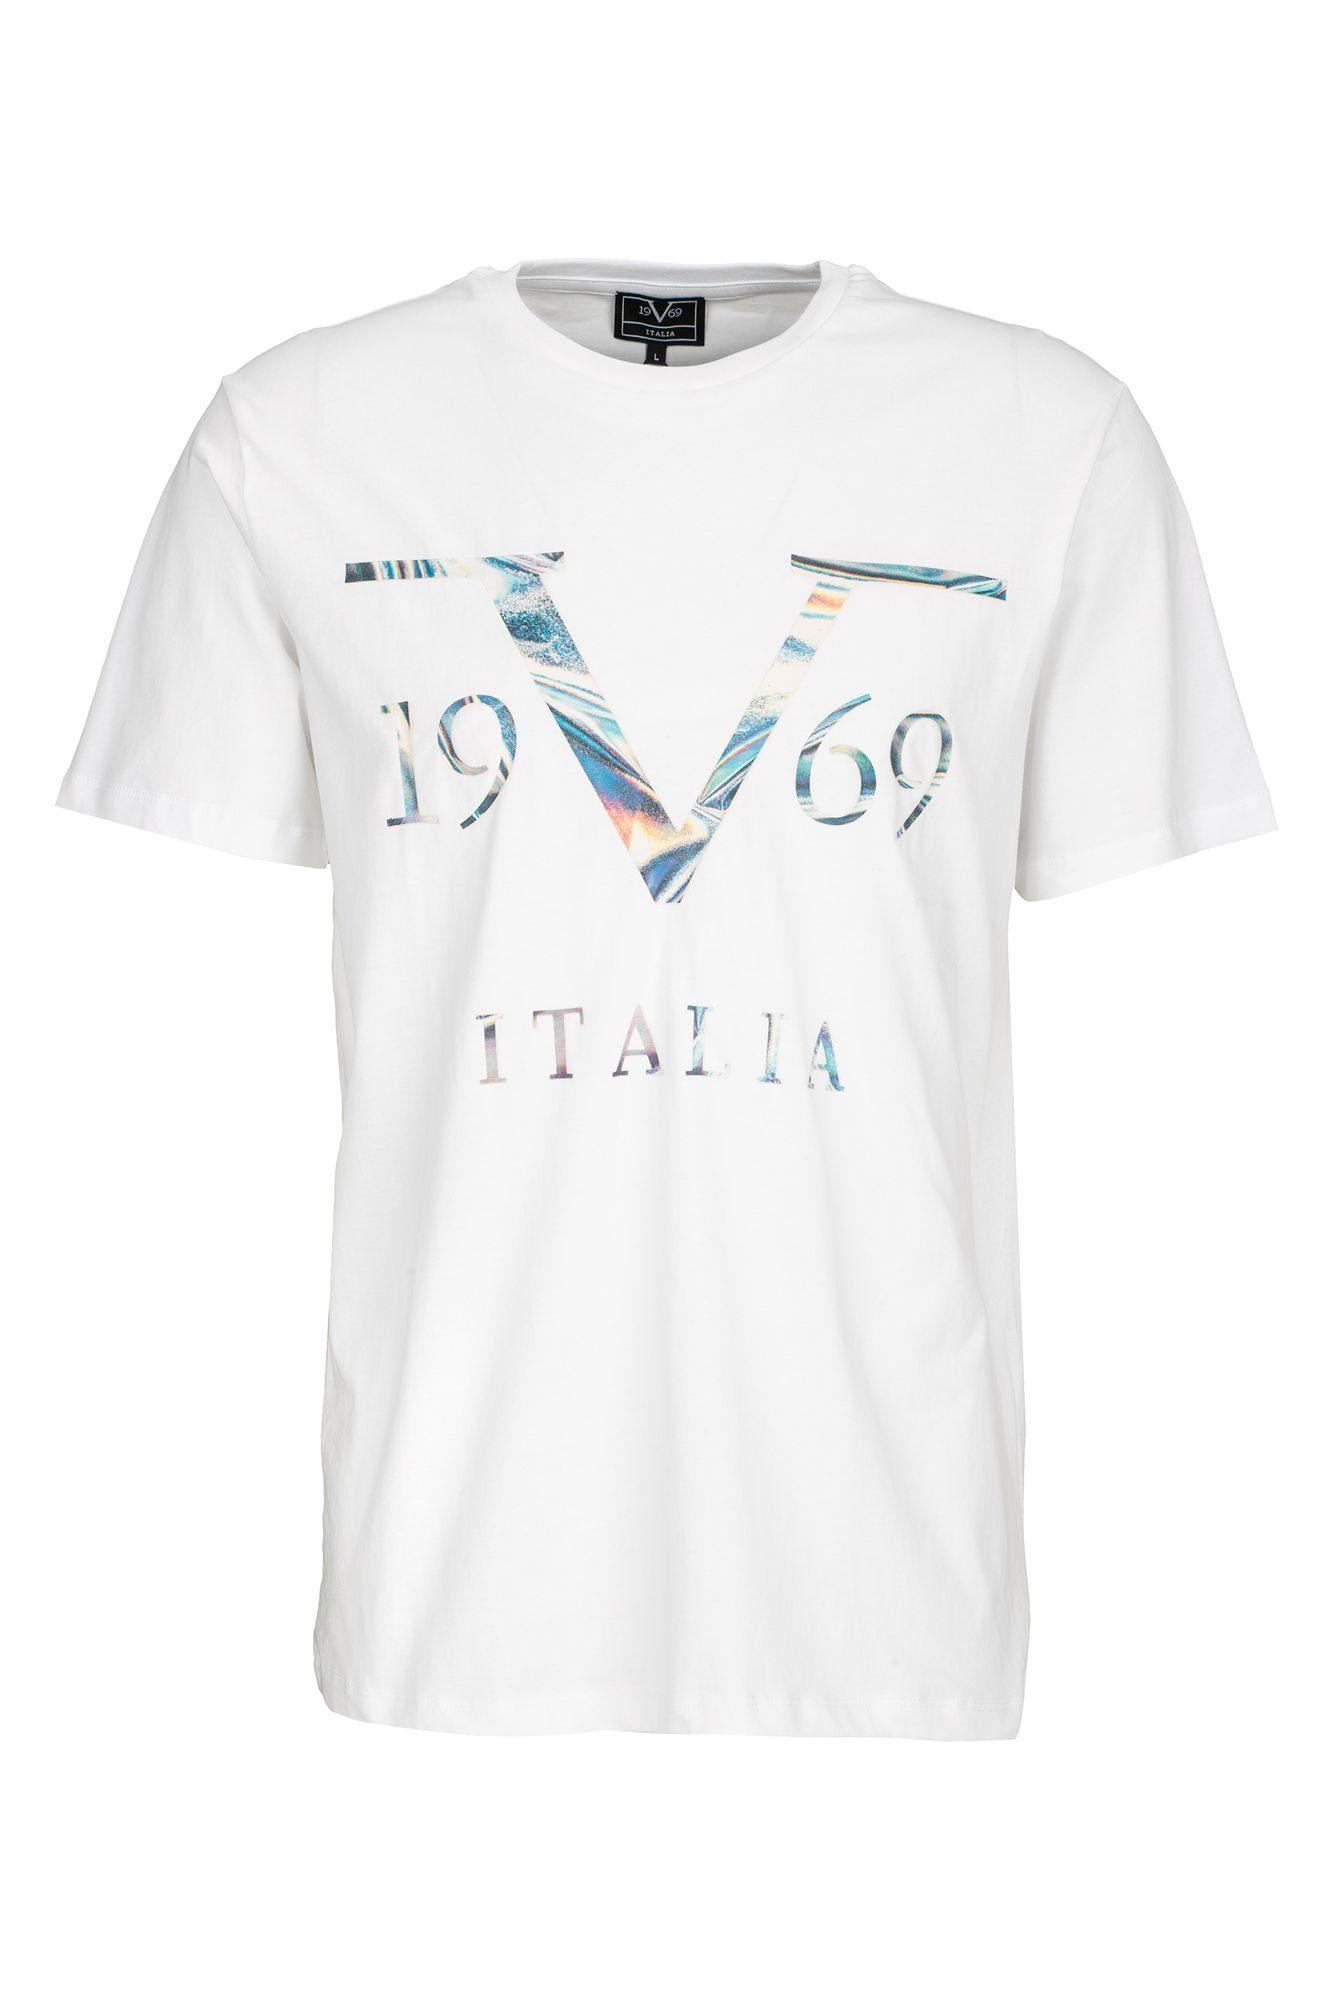 19V69 by Italia Ben Versace T-Shirt